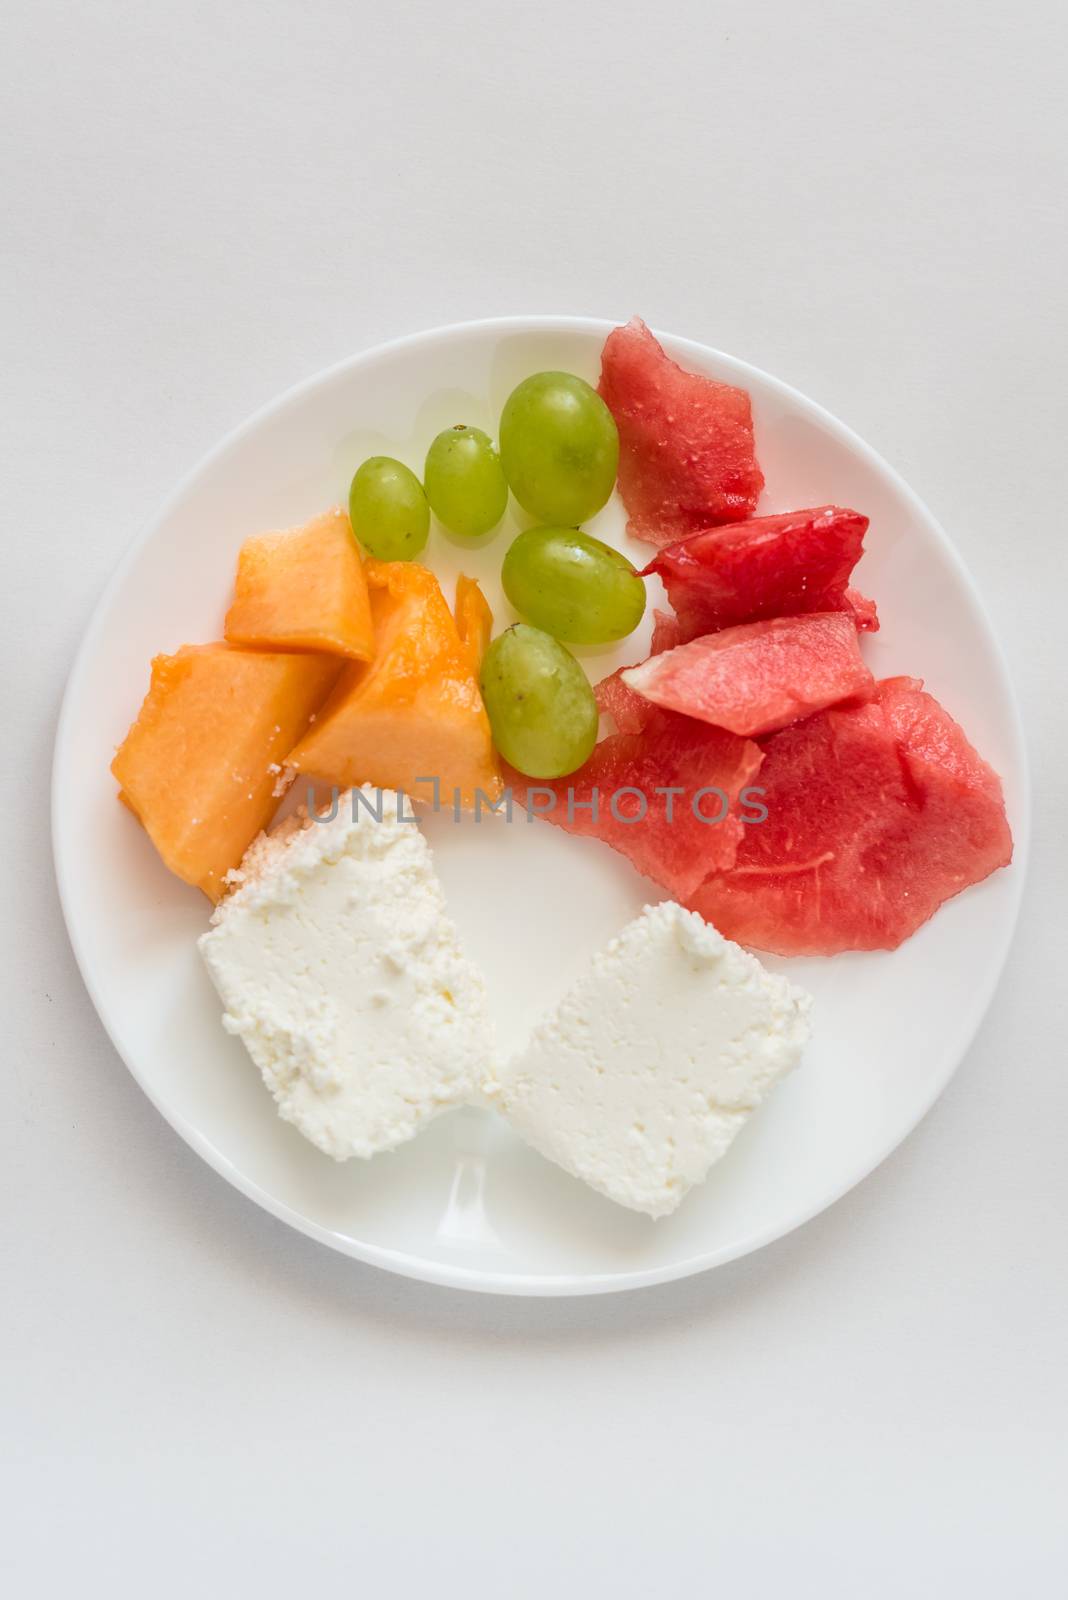 sliced watermelon, cantaloupe, cheese, grapes by okskukuruza